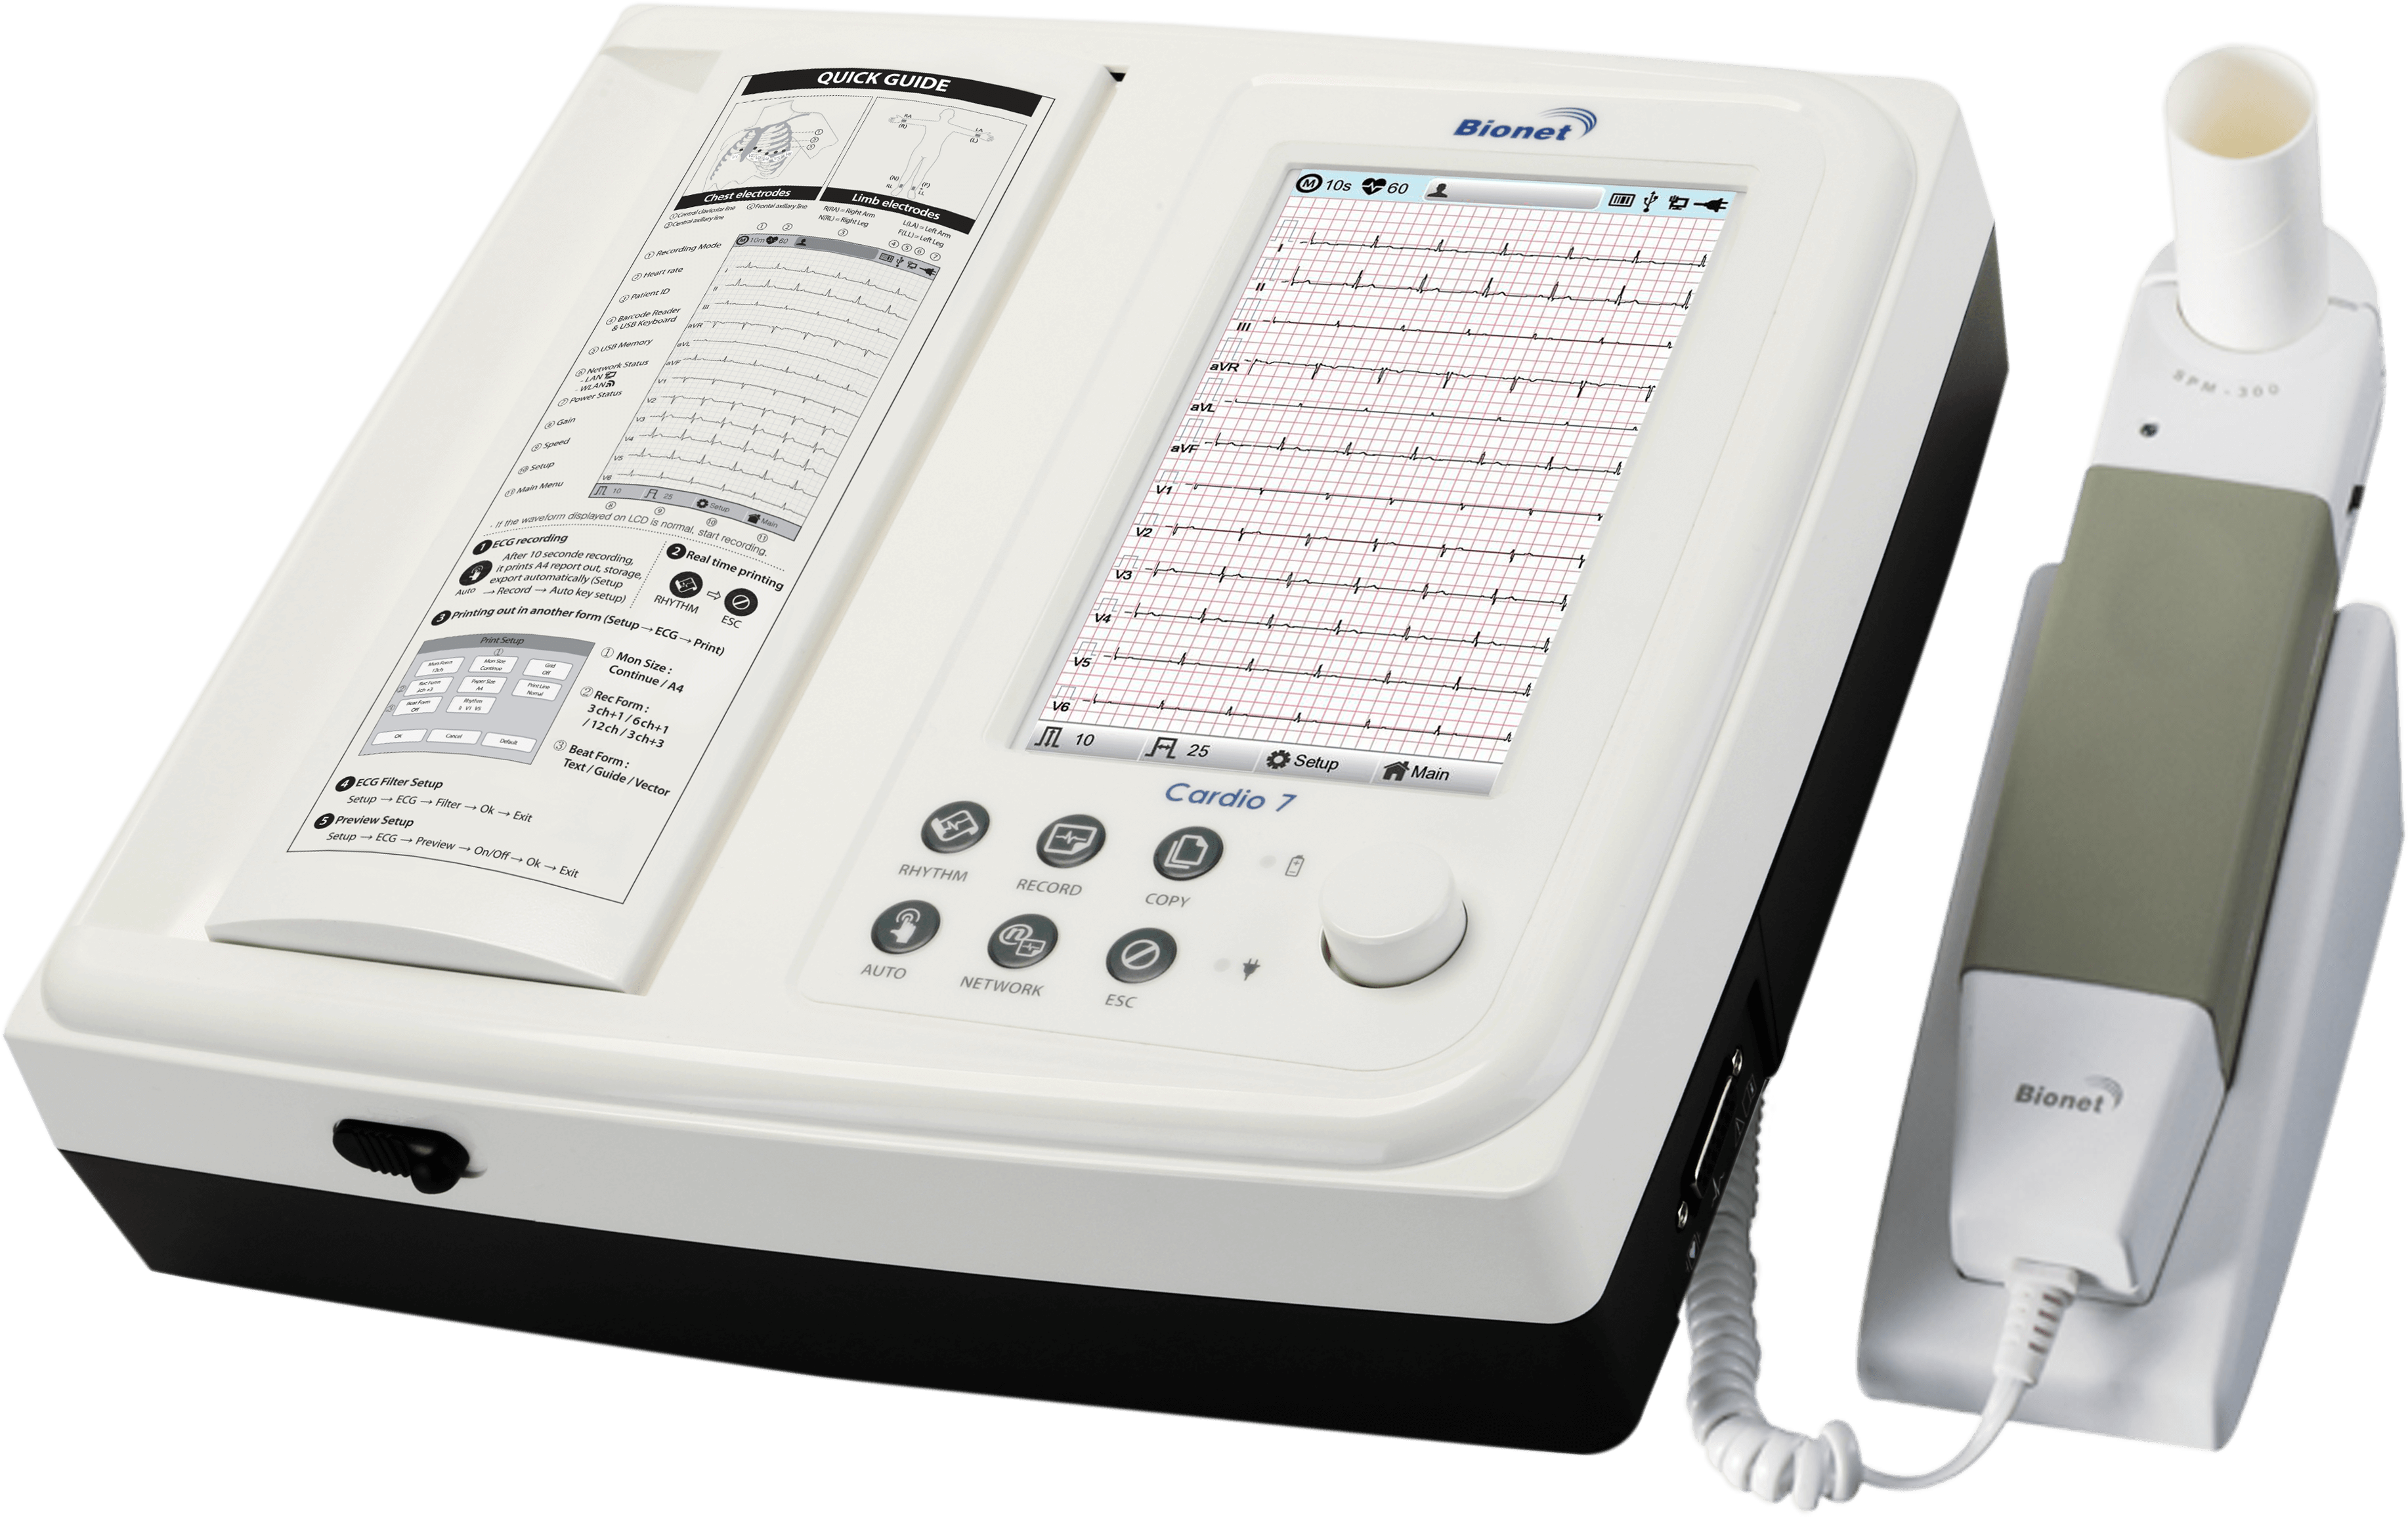 Cardio7-S Bionet Interpretive Electrocardiogram ECG EKG Machine with Spirometry_slide